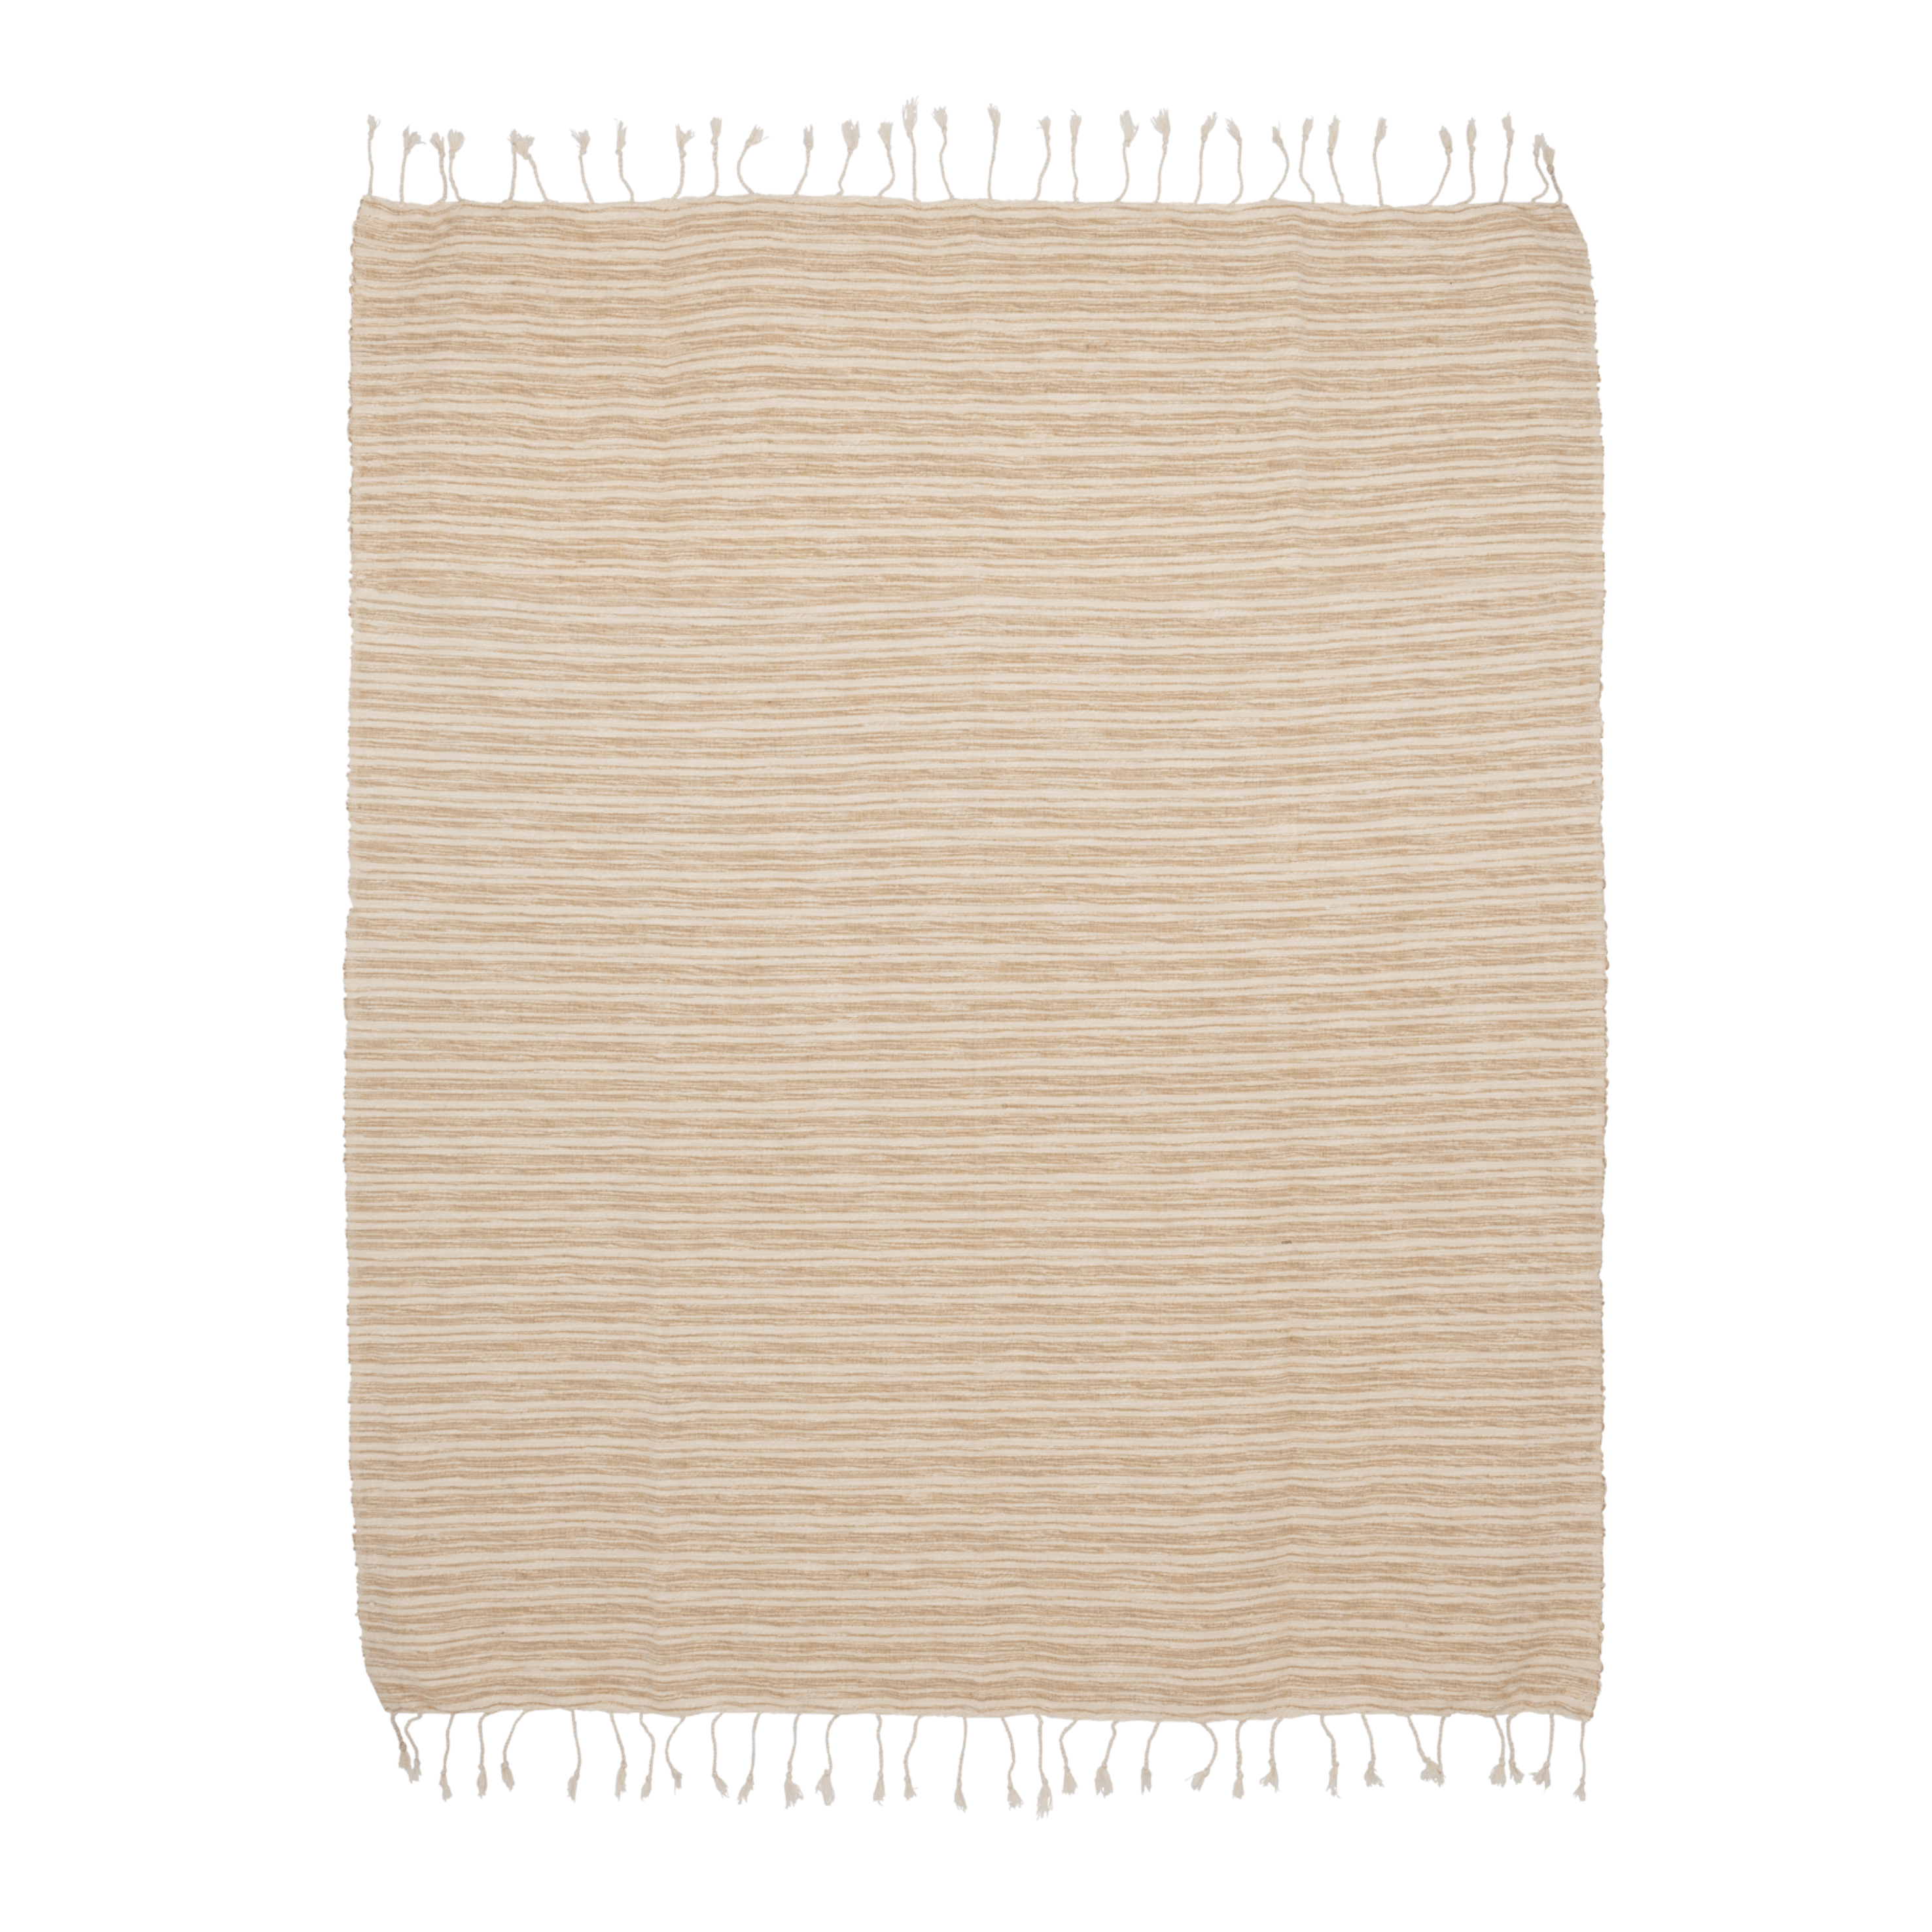 Unc Plaid Irregular Stripe Praire Sand And White Gift